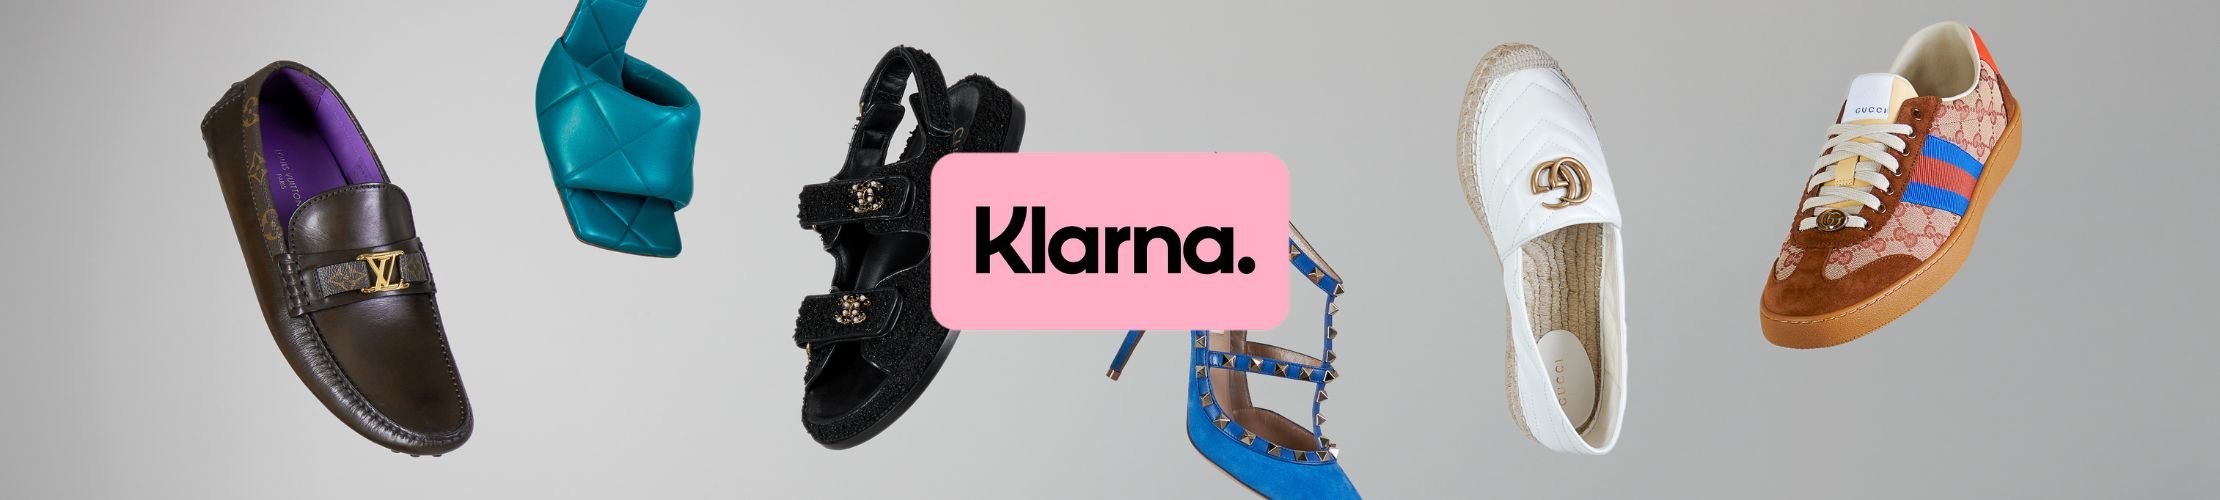 Klarna - Shop now pay later - Designer Exchange